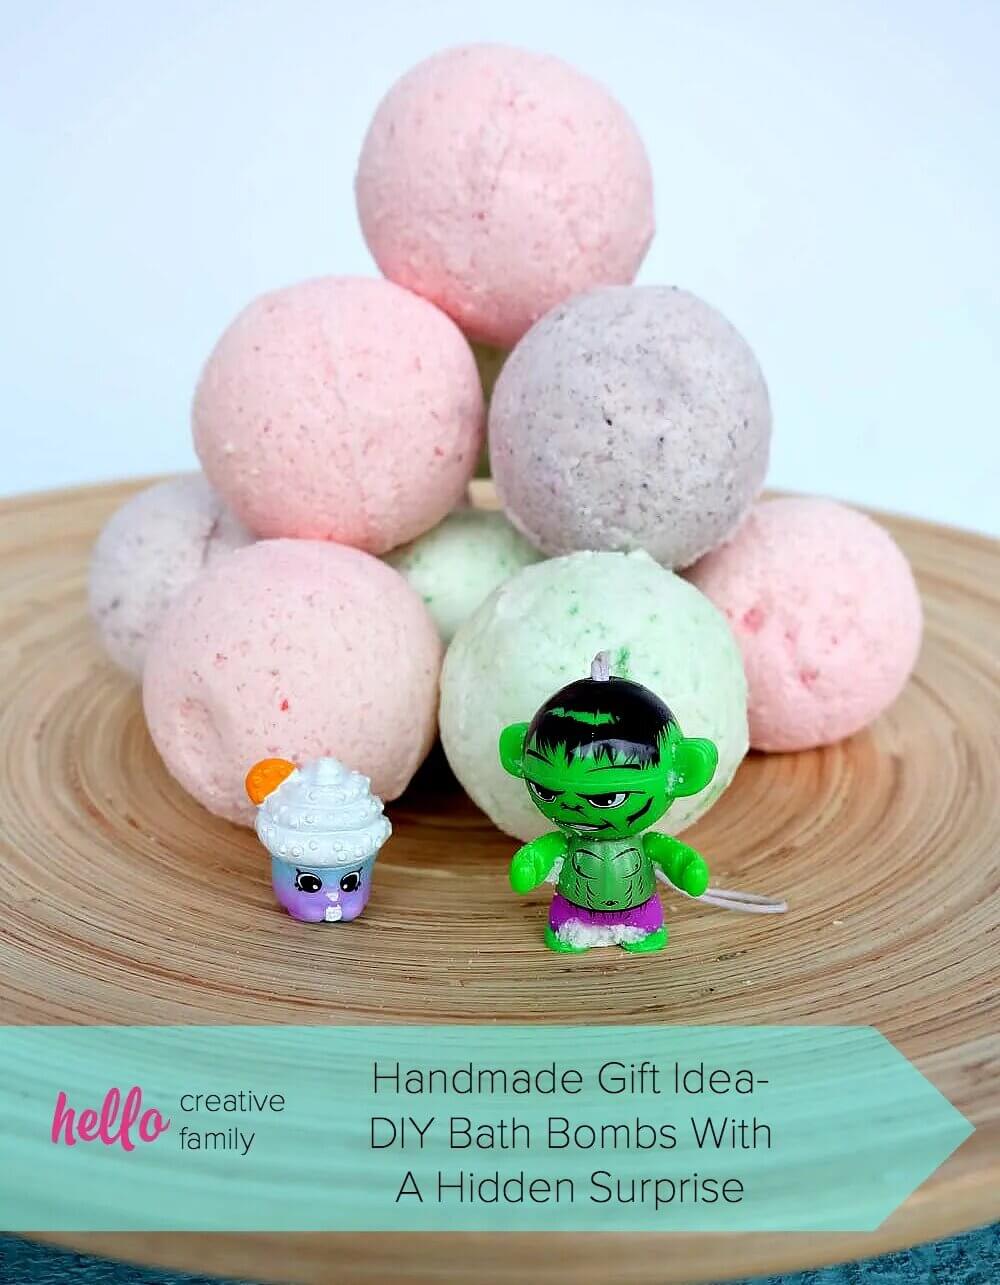 Handmade Bath Bomb Gift Idea With Hidden Surprises